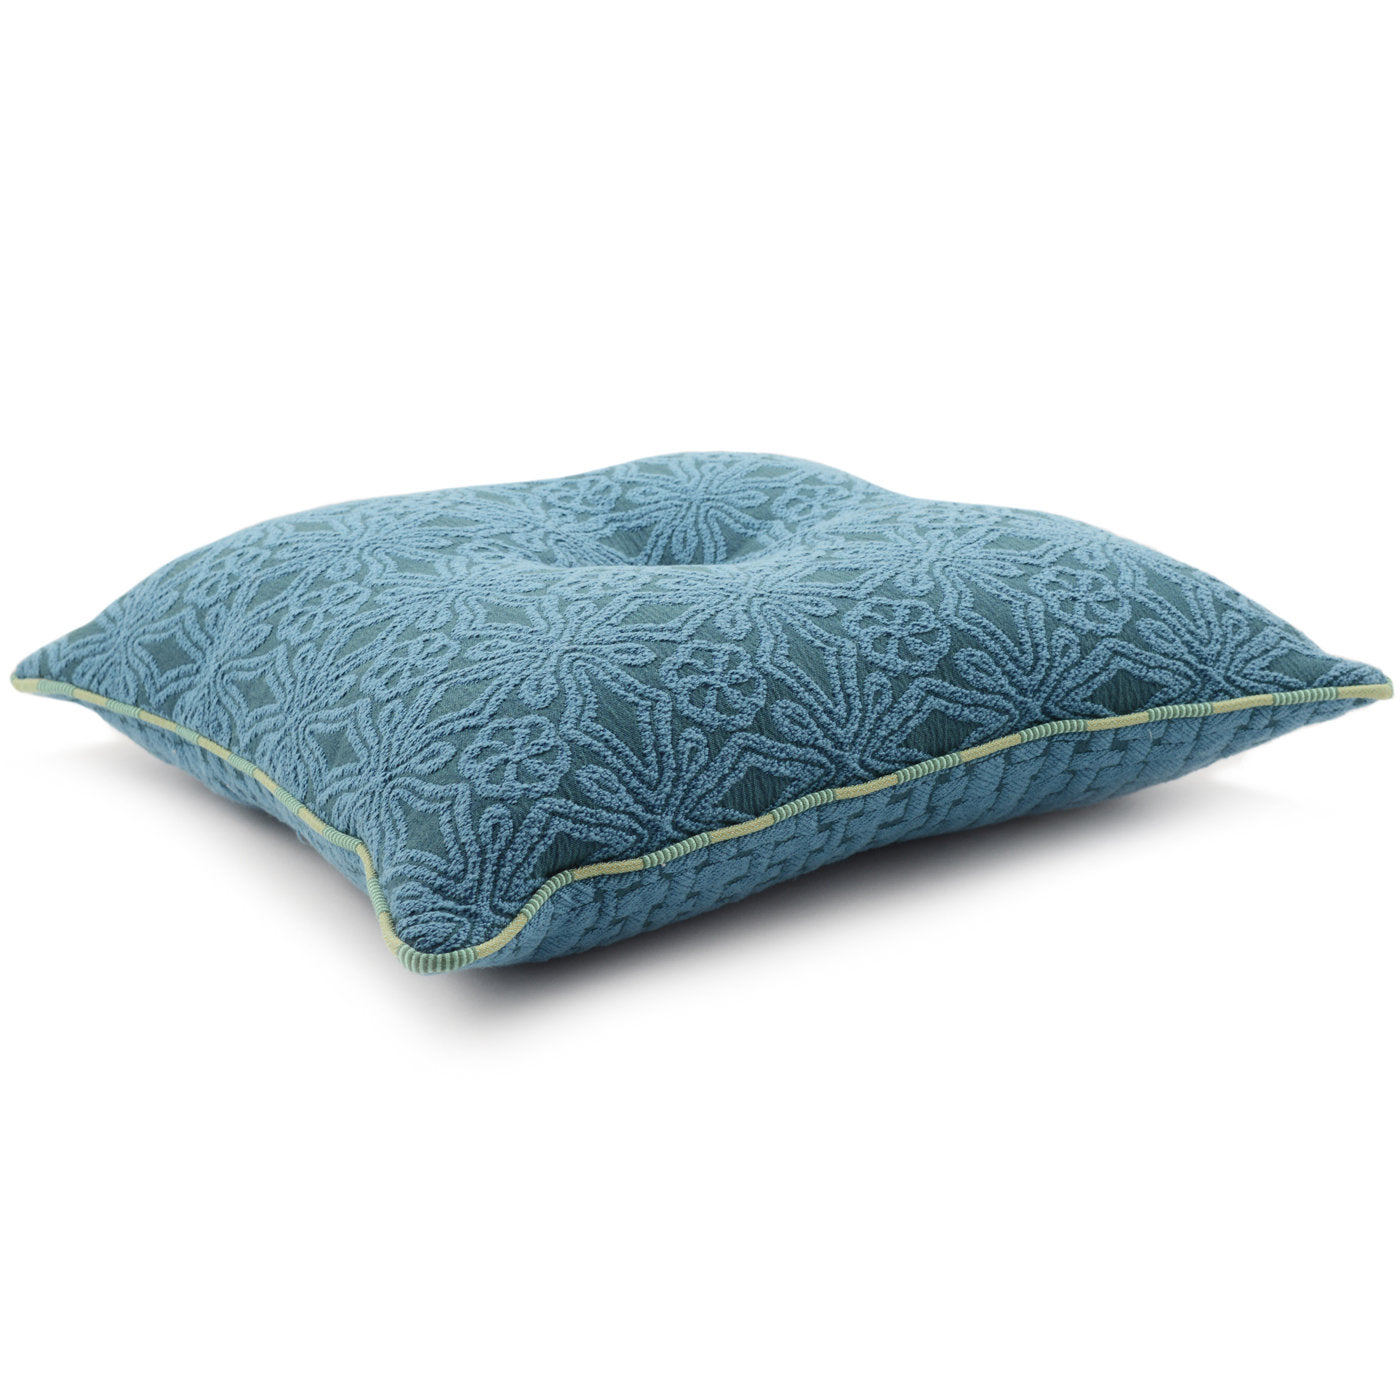 Light Blue Carré Cushion in floreal jacquard fabric - Alternative view 2